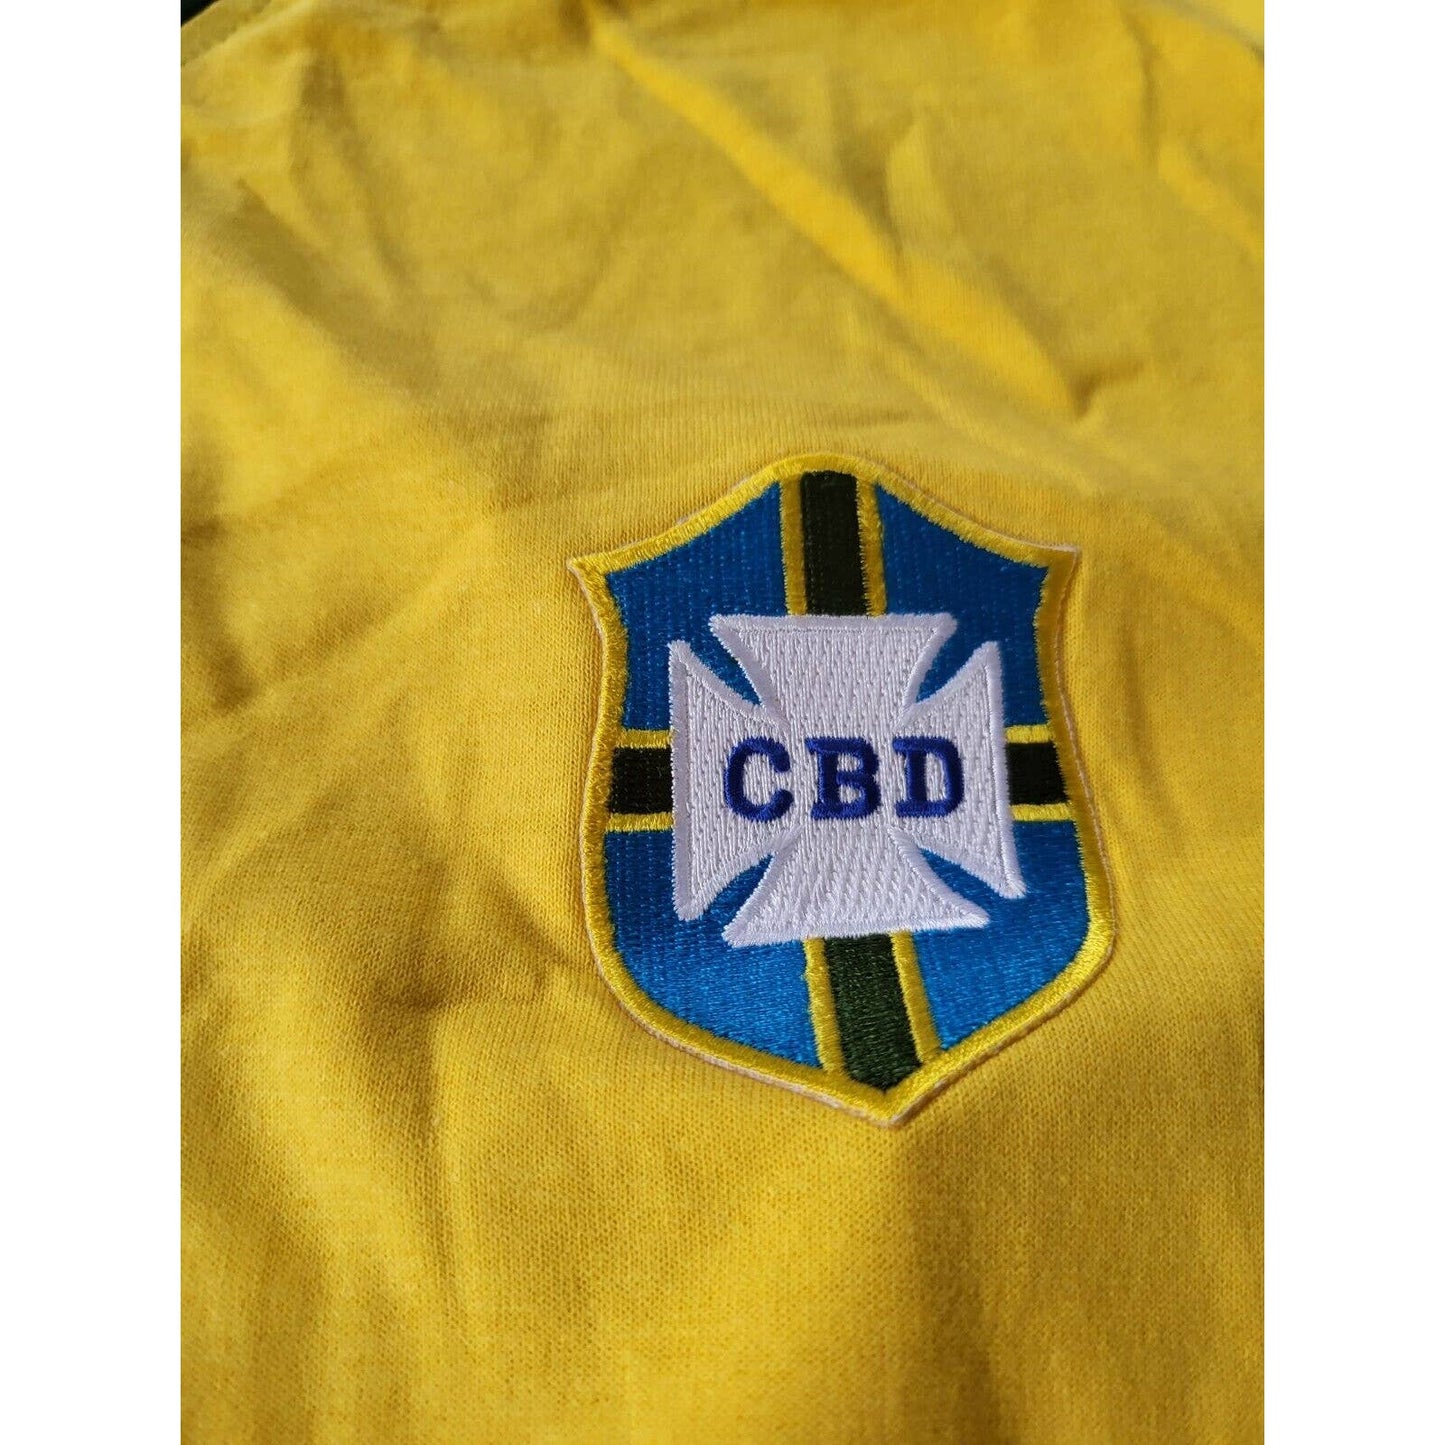 Pelé Autographed/Signed Shirt Jersey PSA/DNA COA Pele Brazil Brasil - TreasuresEvolved